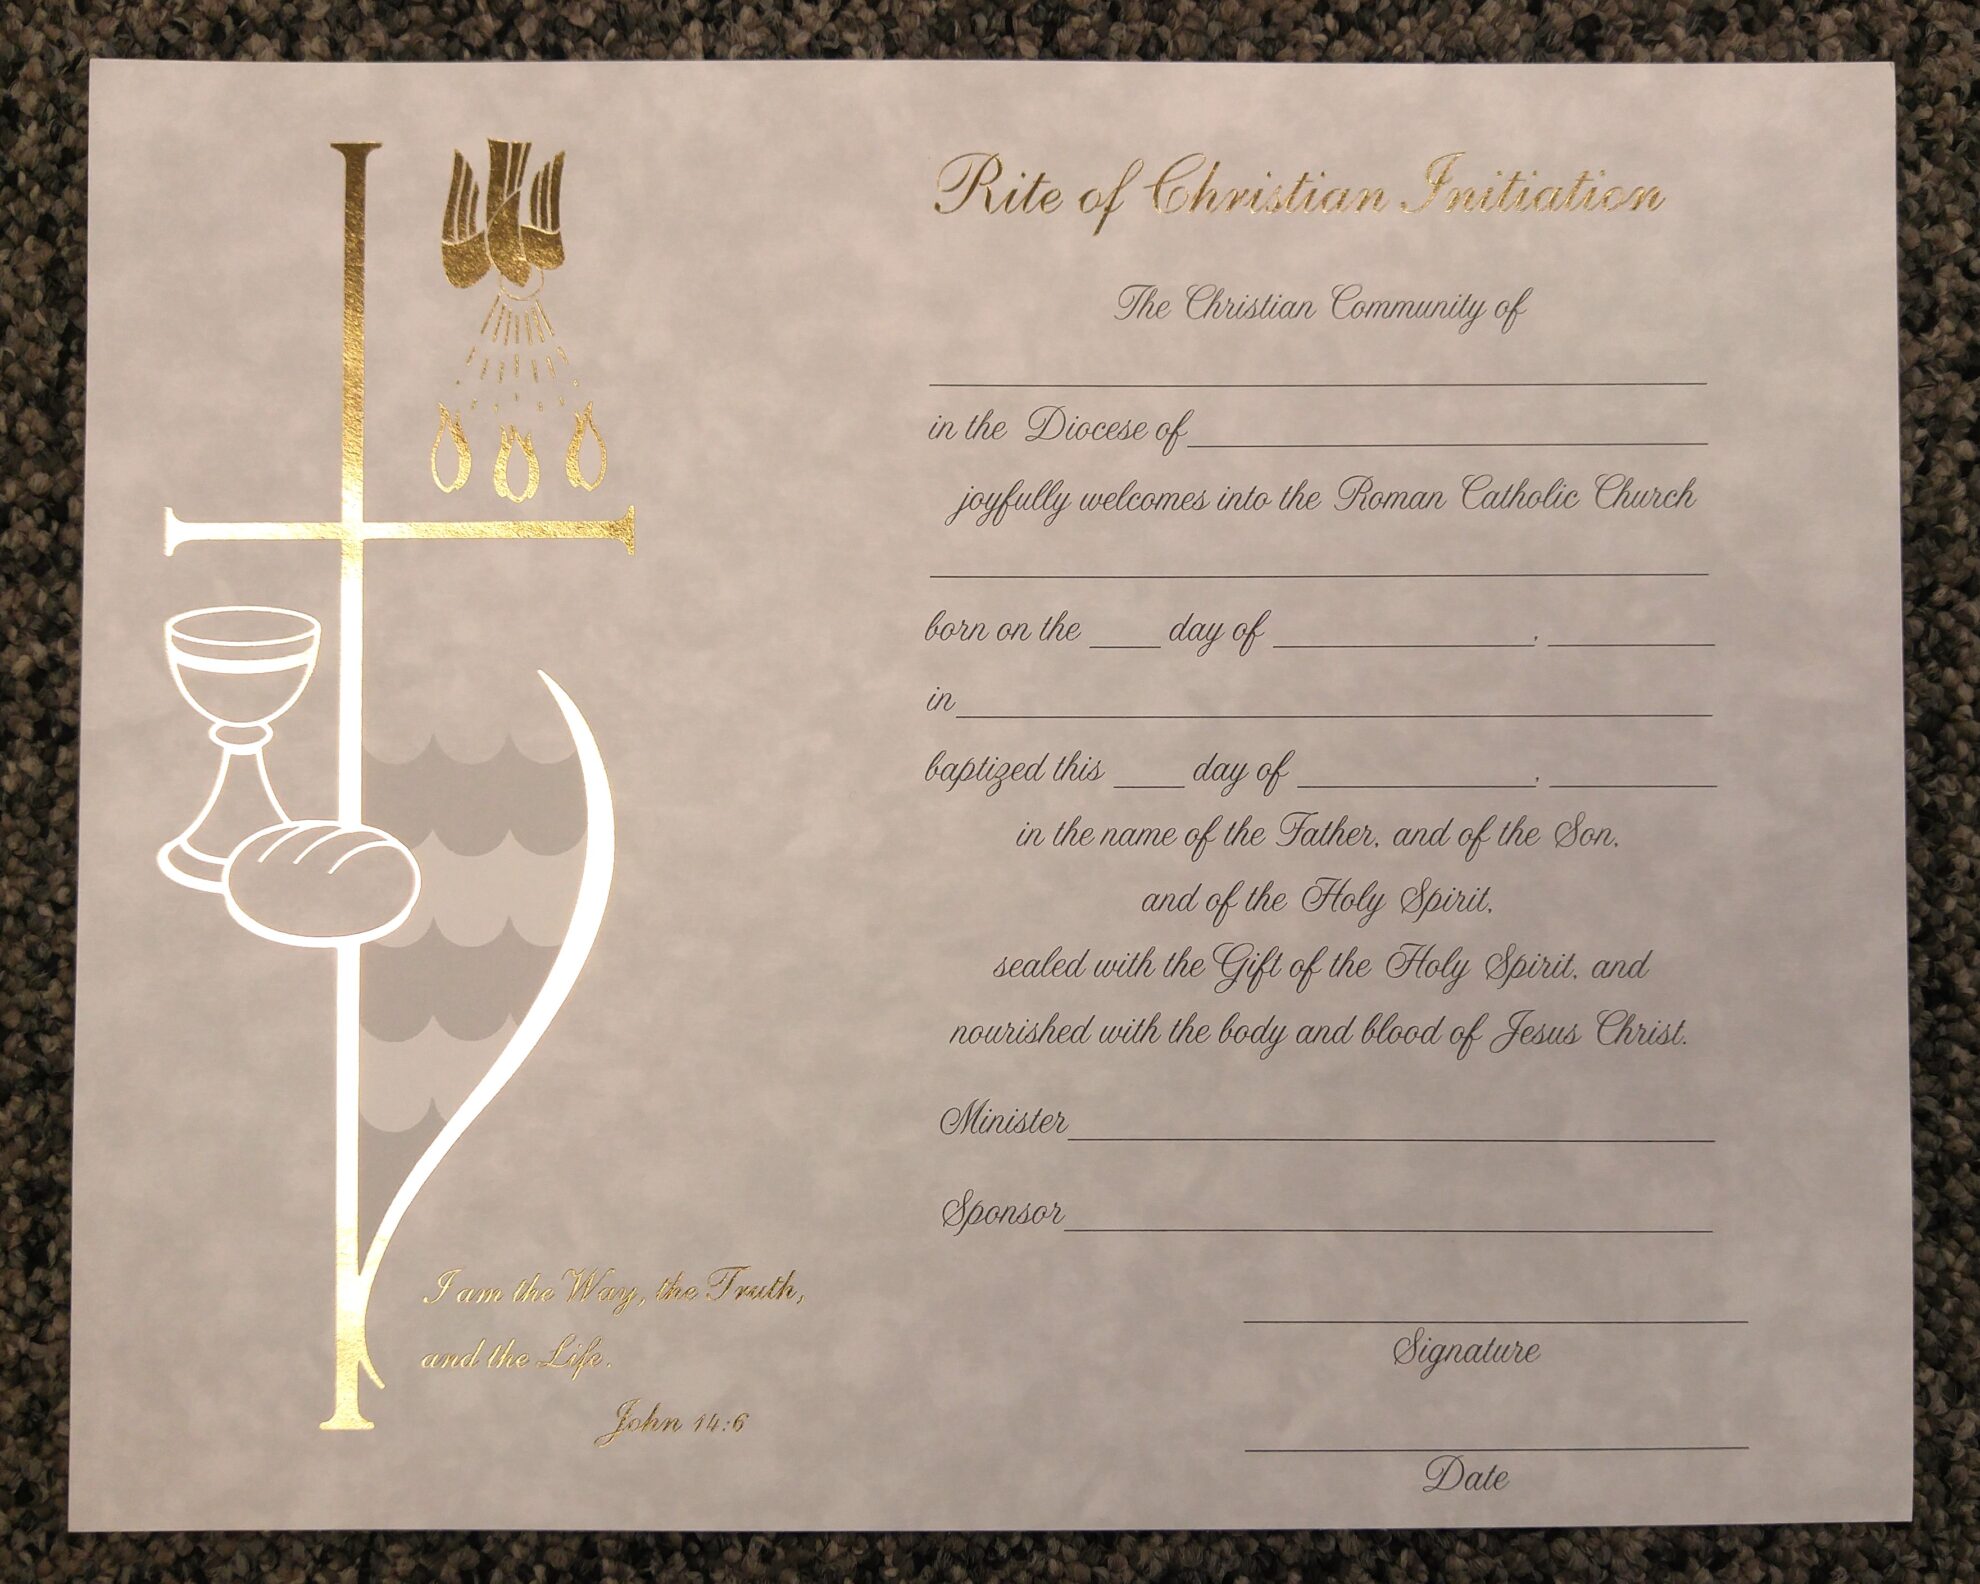 RCIA Certificate Parchment Universal Church Supplies